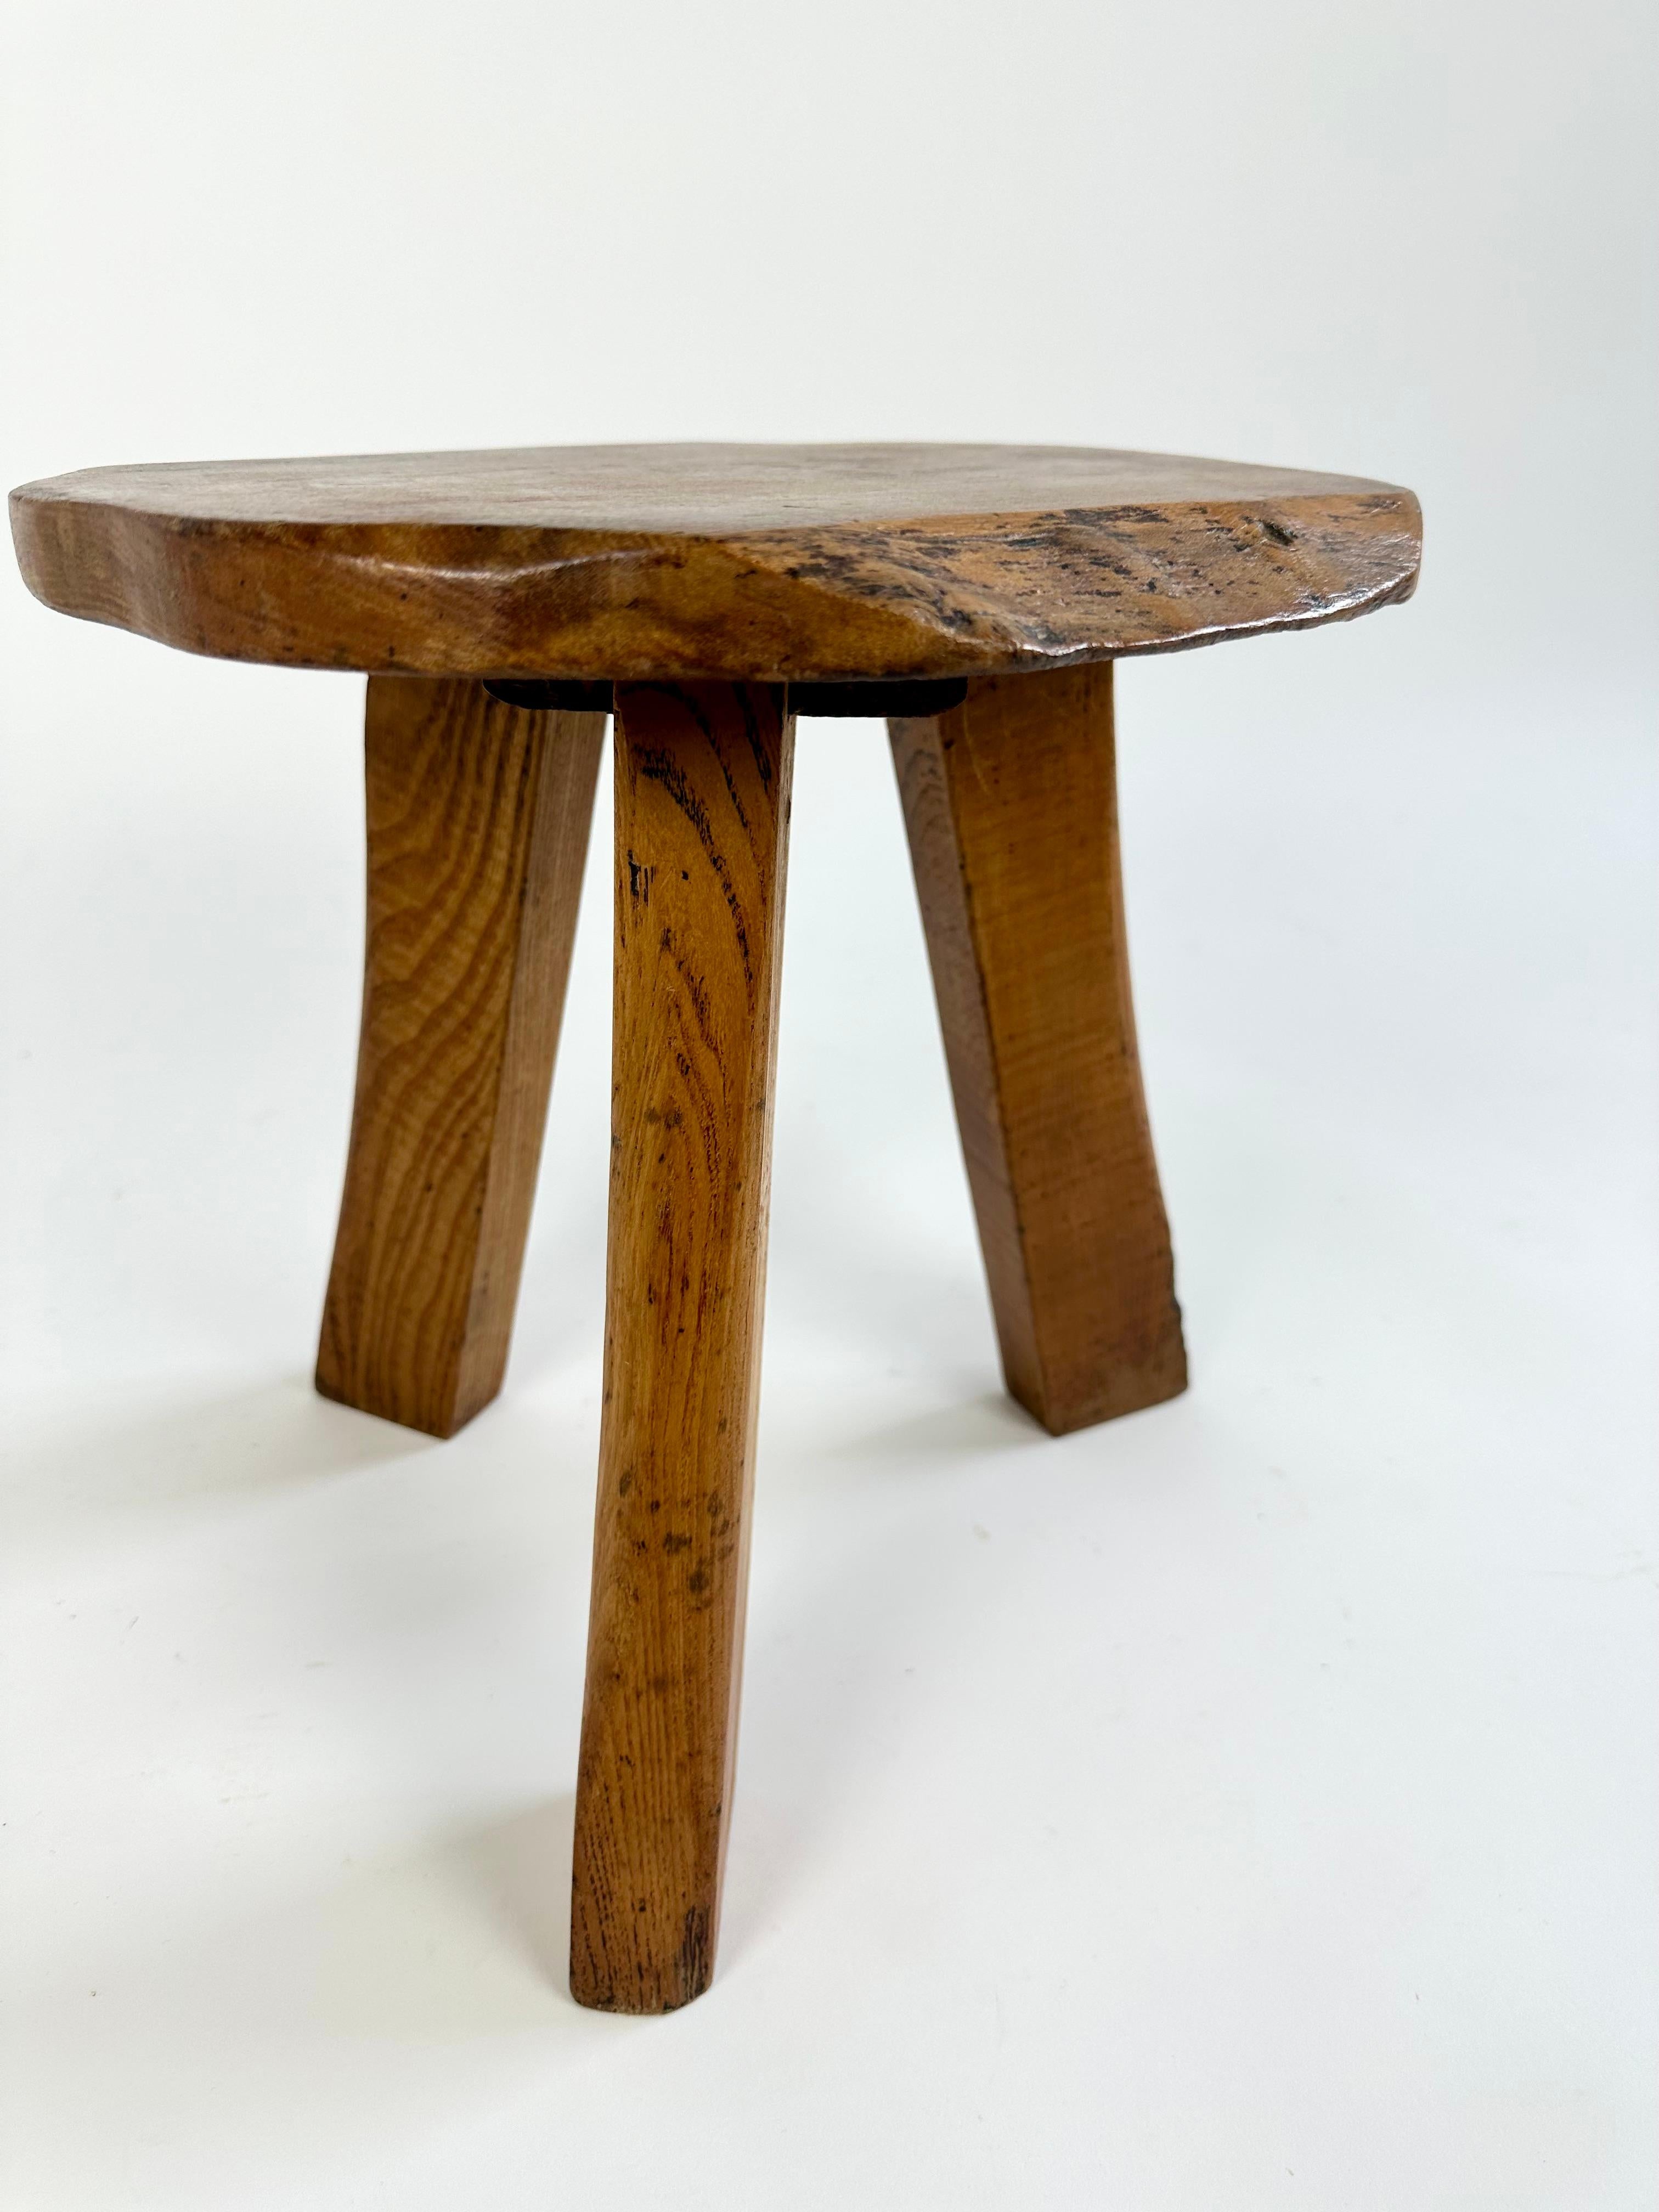 Elm Vintage rustic stool by Wanderwood, England c.1950-60 For Sale